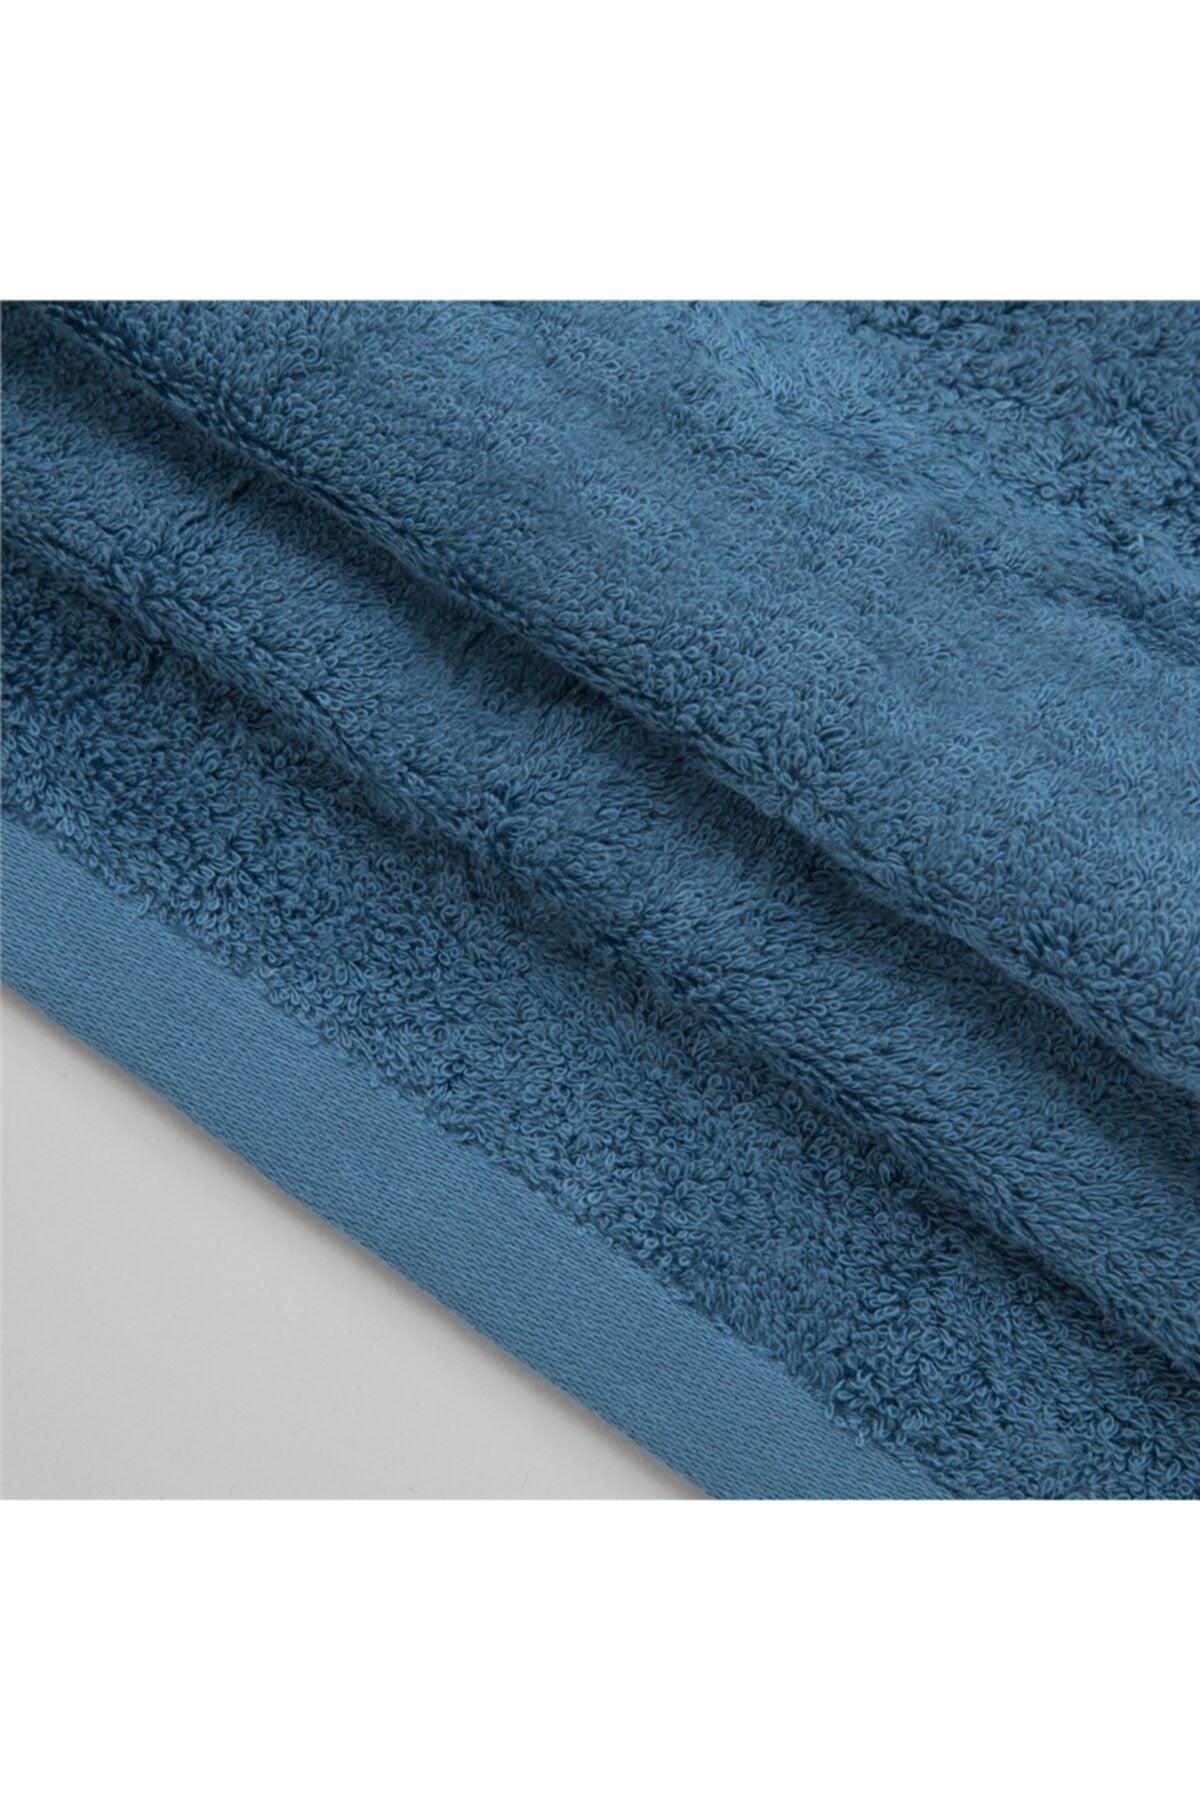 Solid Hand Towel 33x33 Cm Midnight Blue - Swordslife